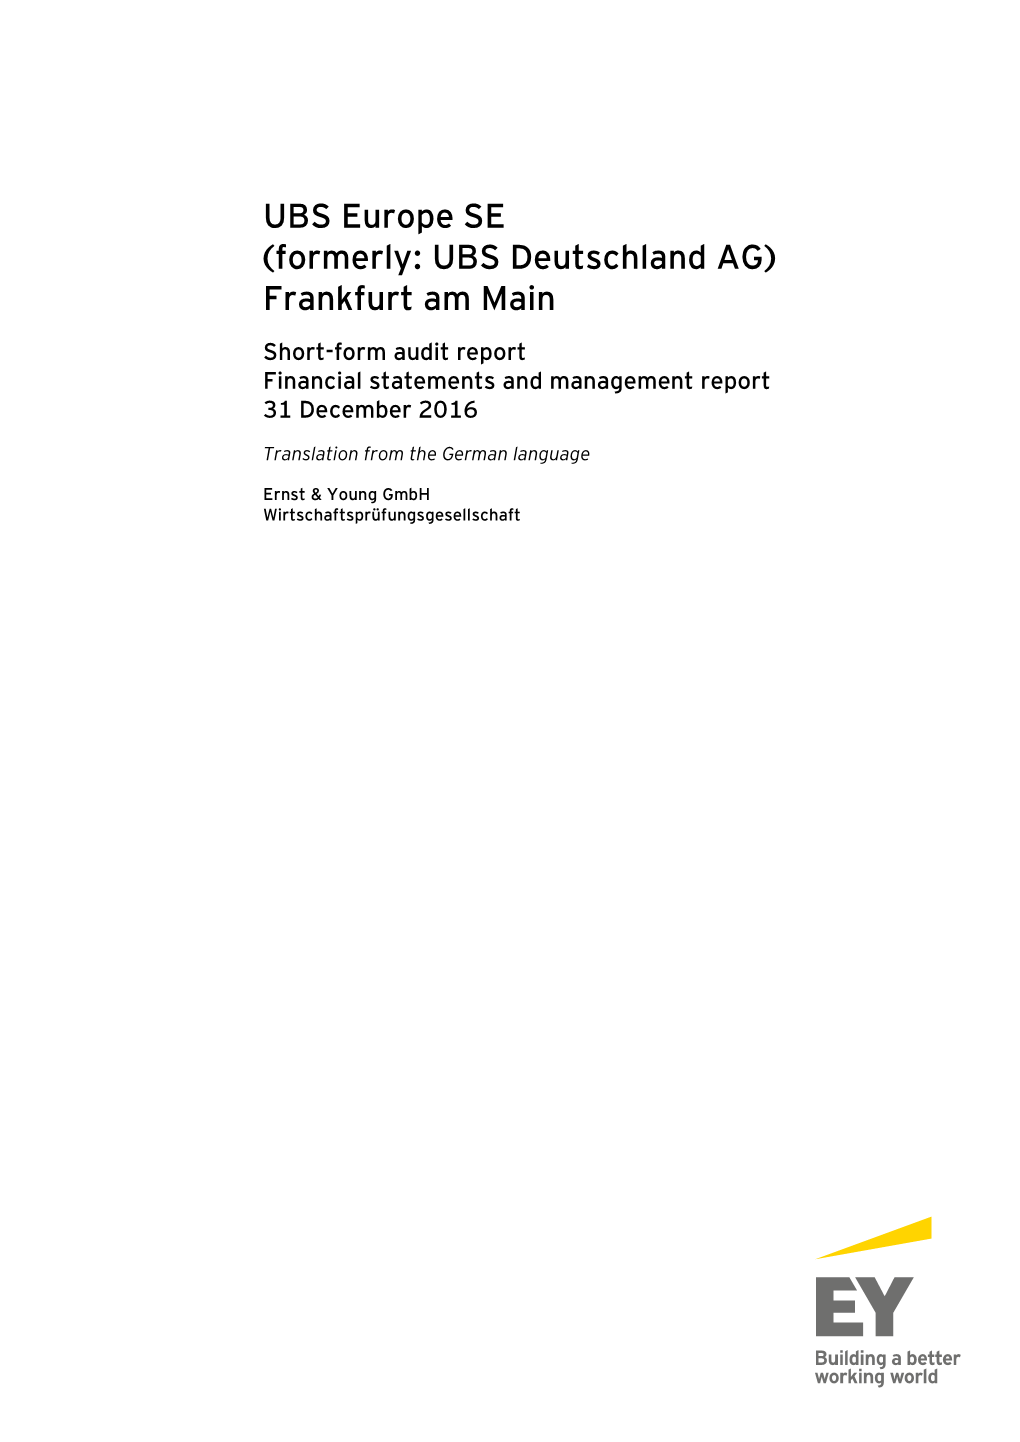 UBS Europe SE (Formerly: UBS Deutschland AG) Frankfurt Am Main Short-Form Audit Report Financial Statements and Management Report 31 December 2016